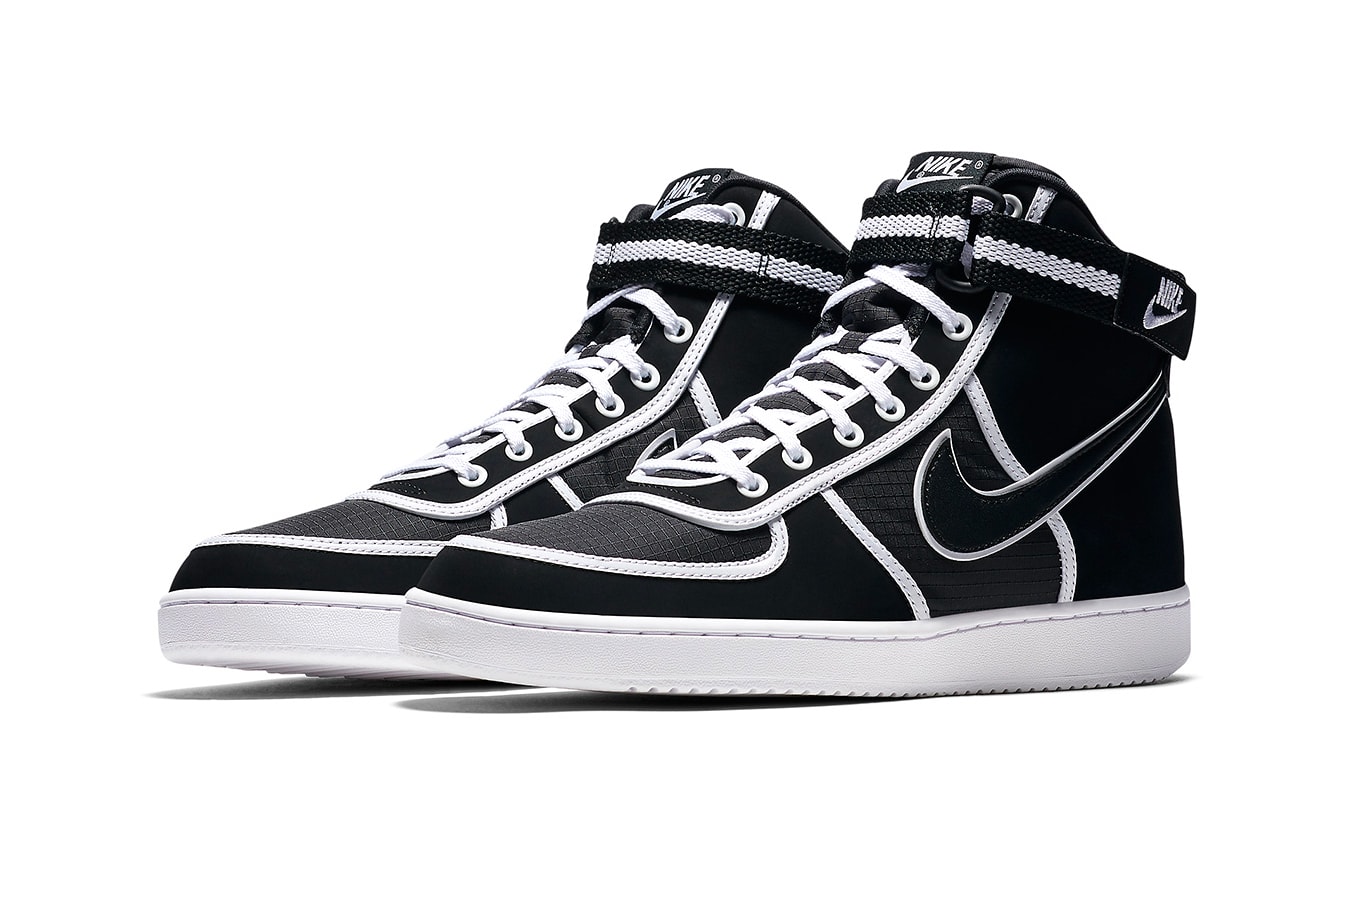 Nike Vandal High Black White fall 2018 release sneakers